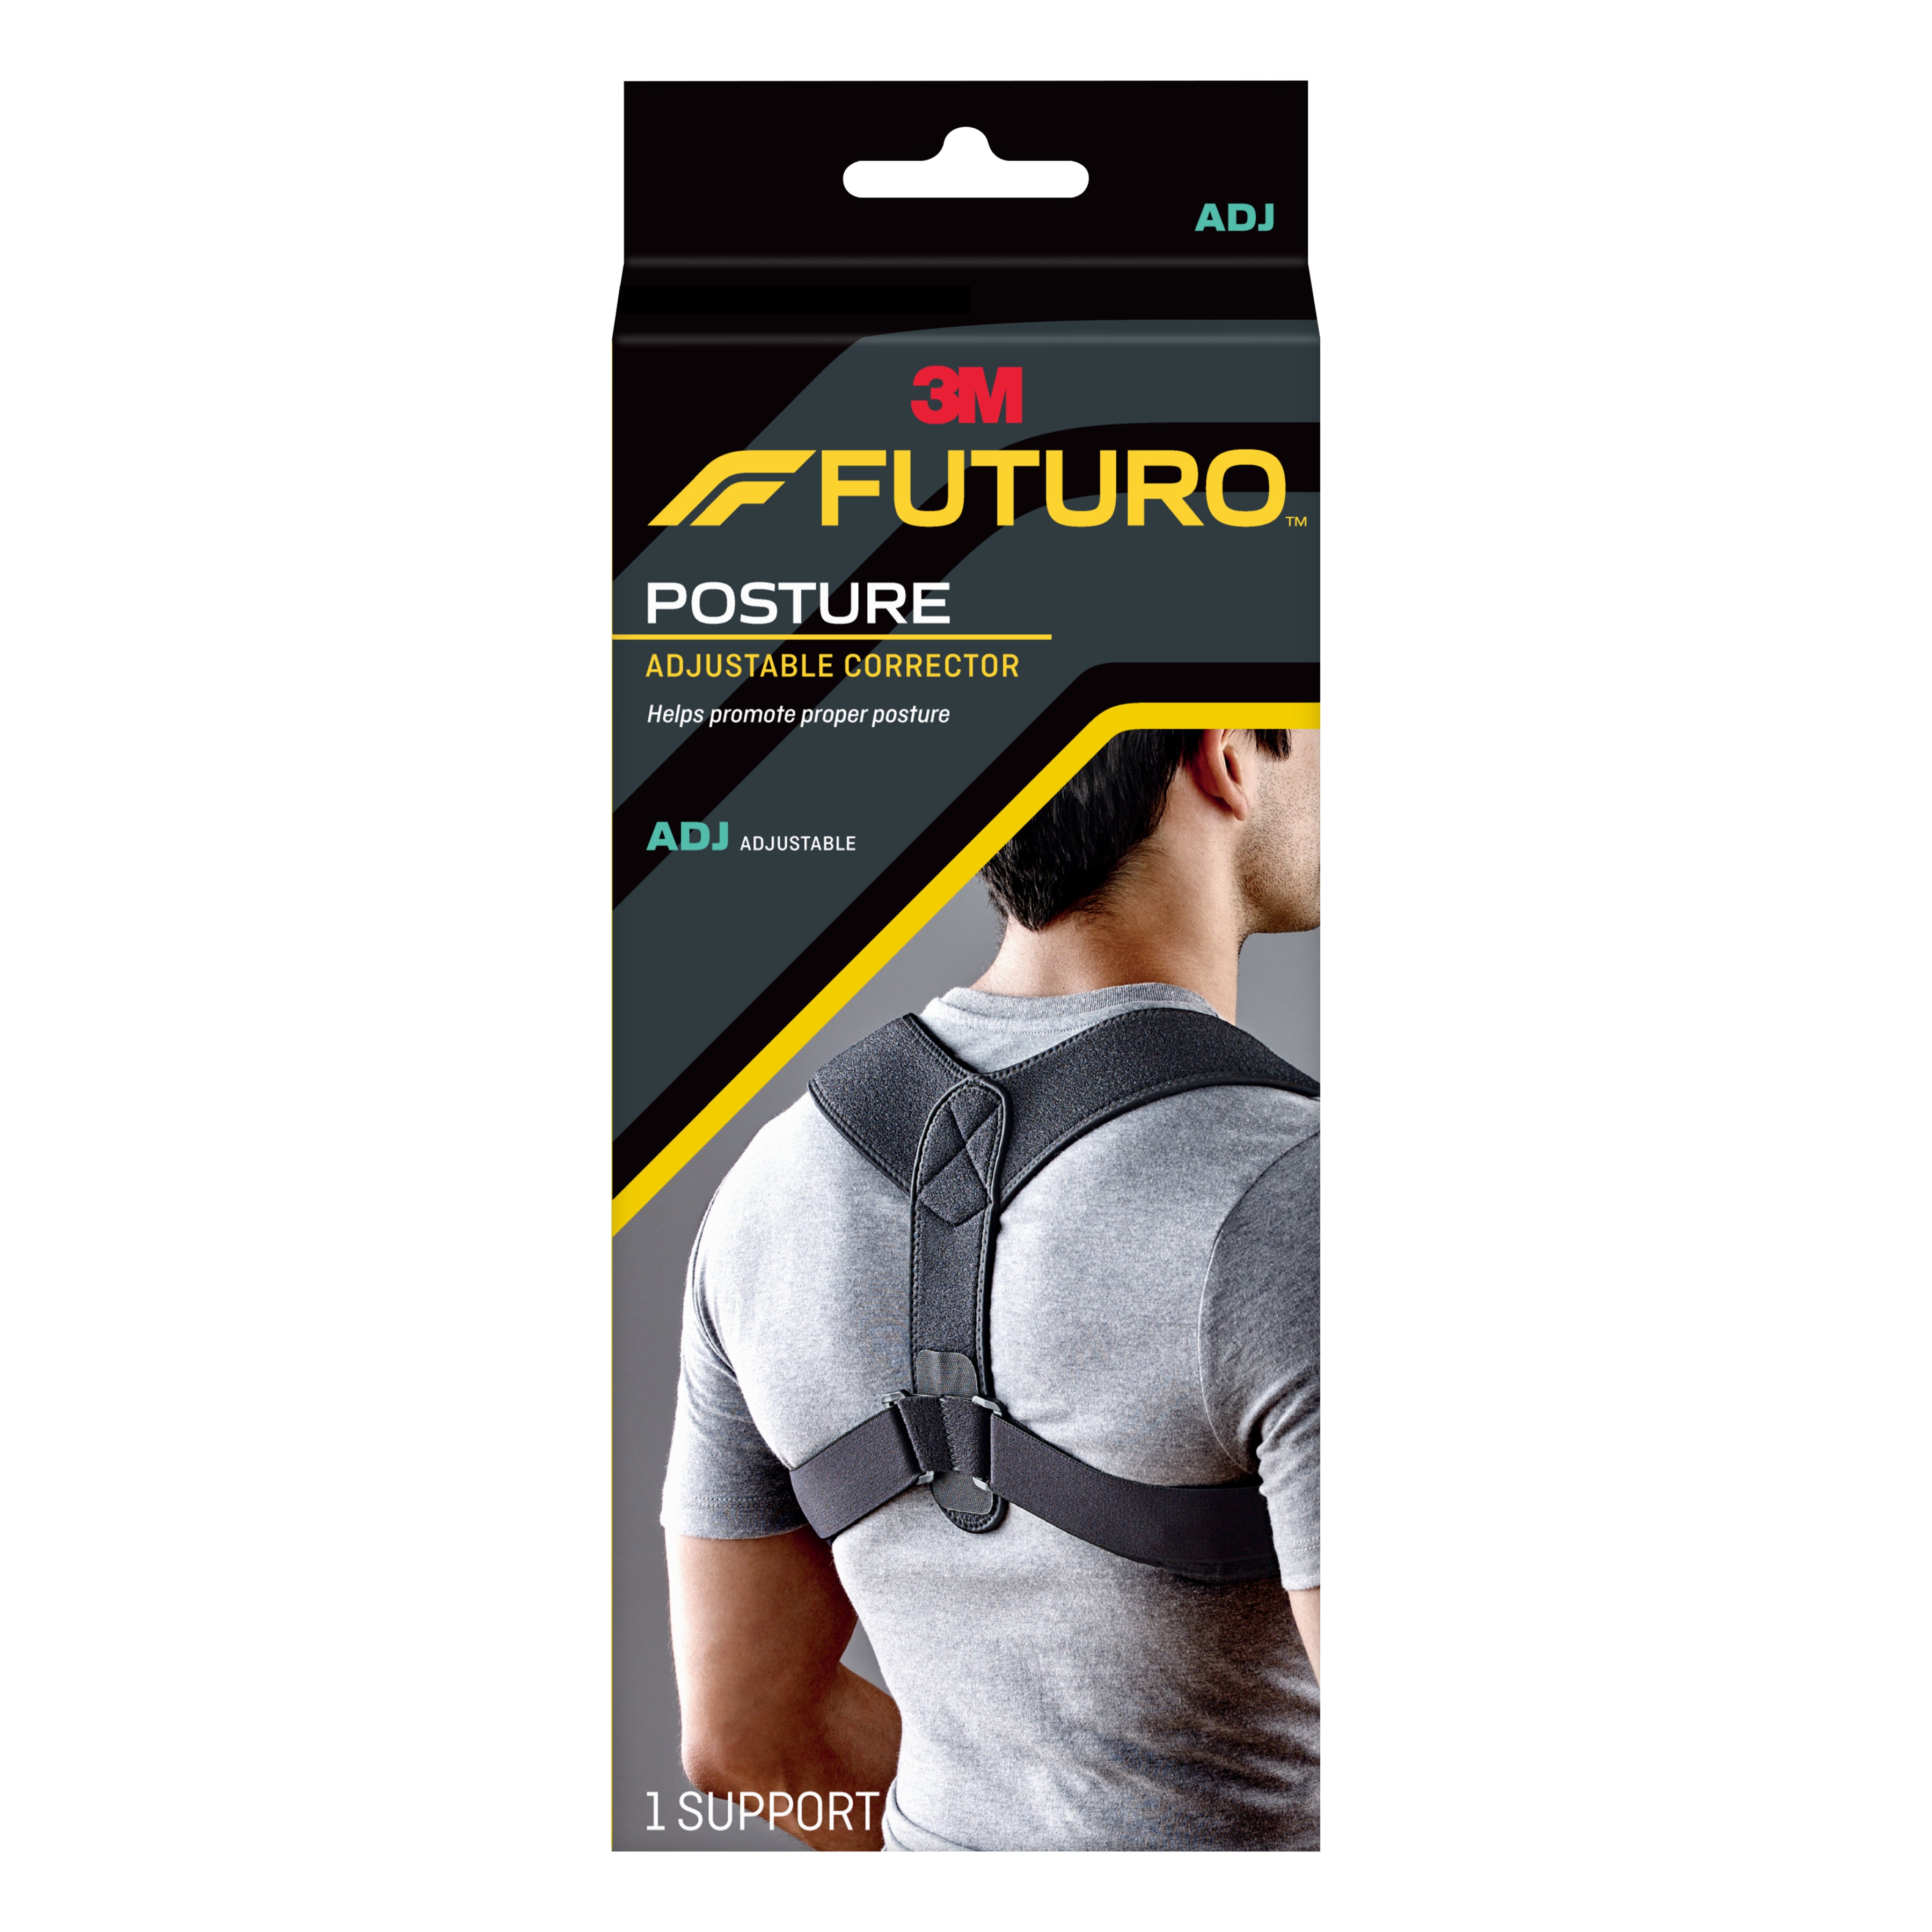 FUTURO Posture Adjustable Corrector